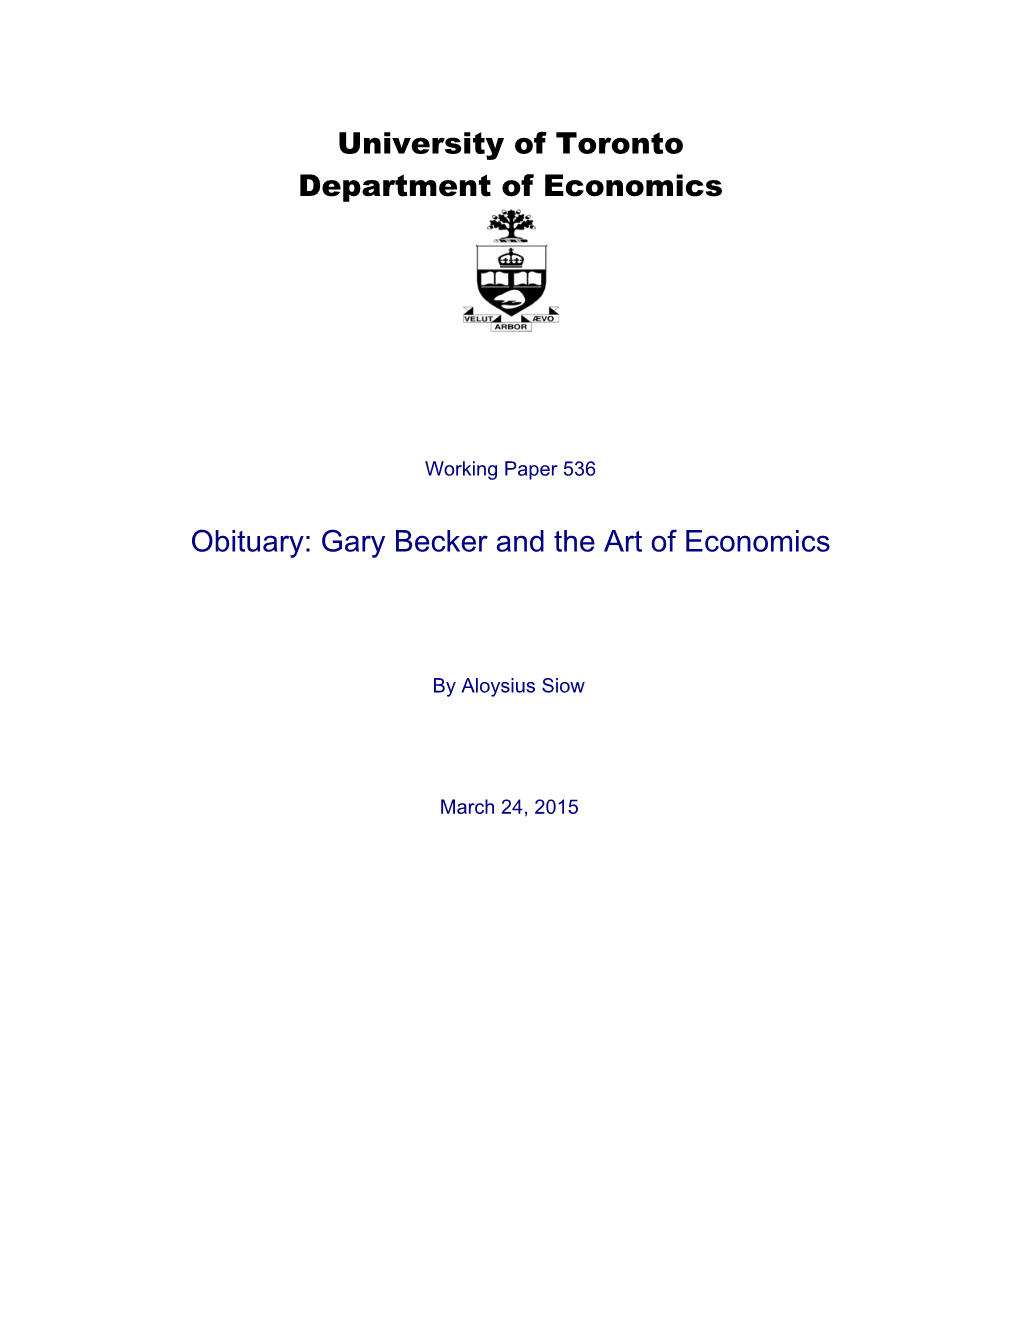 University of Toronto Department of Economics Obituary: Gary Becker